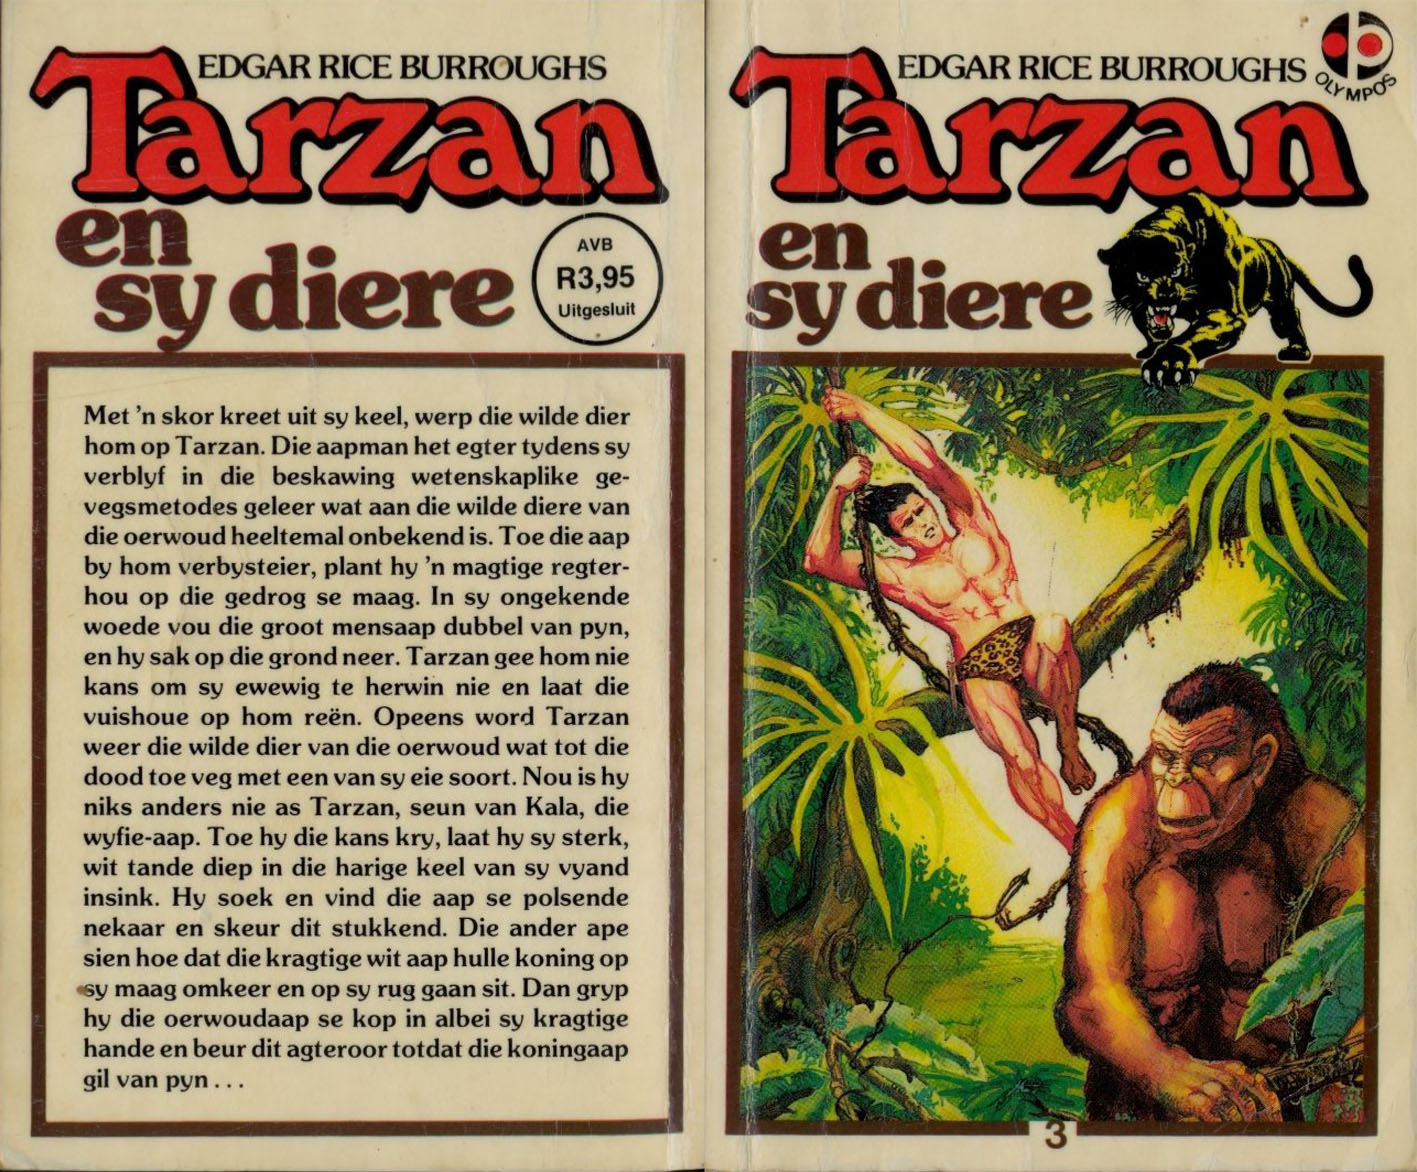 3. Tarzan en sy diere - Edgar Rice Burroughs (1983)